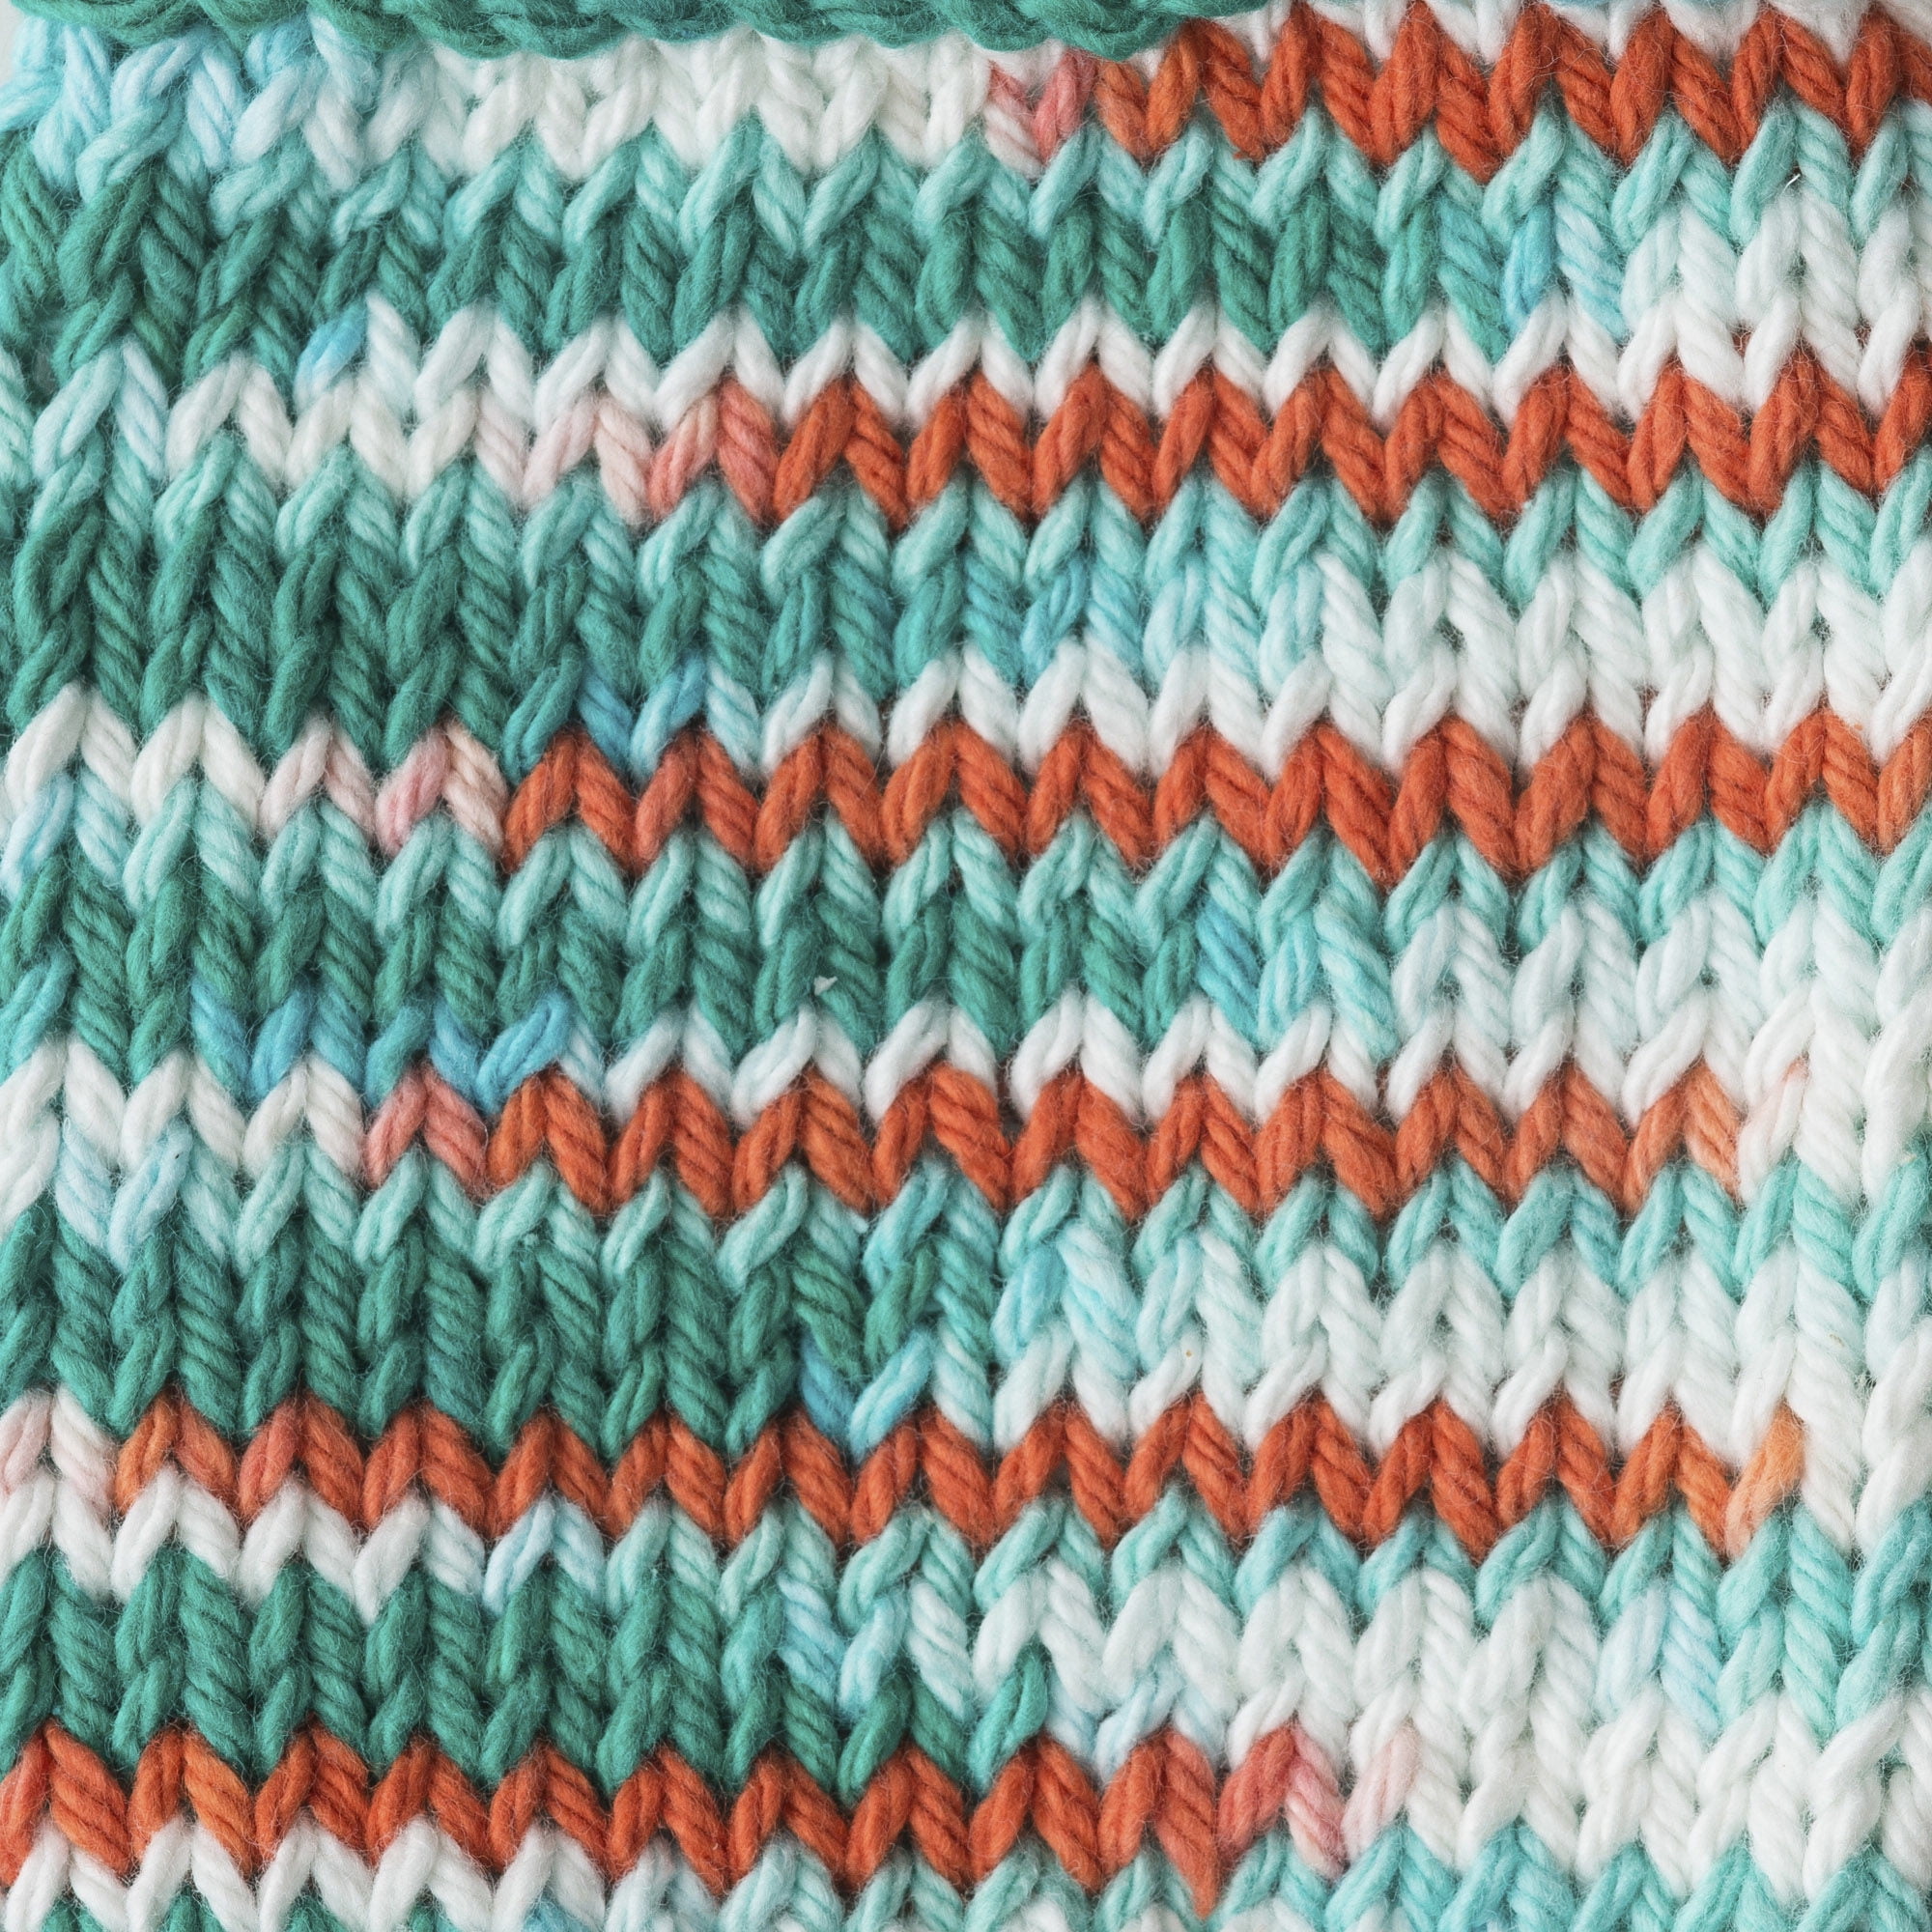 Lily Sugar'N Cream Swimming Pool Yarn - 6 Pack of 57g/2oz - Cotton - 4  Medium (Worsted) - 95 Yards - Knitting/Crochet